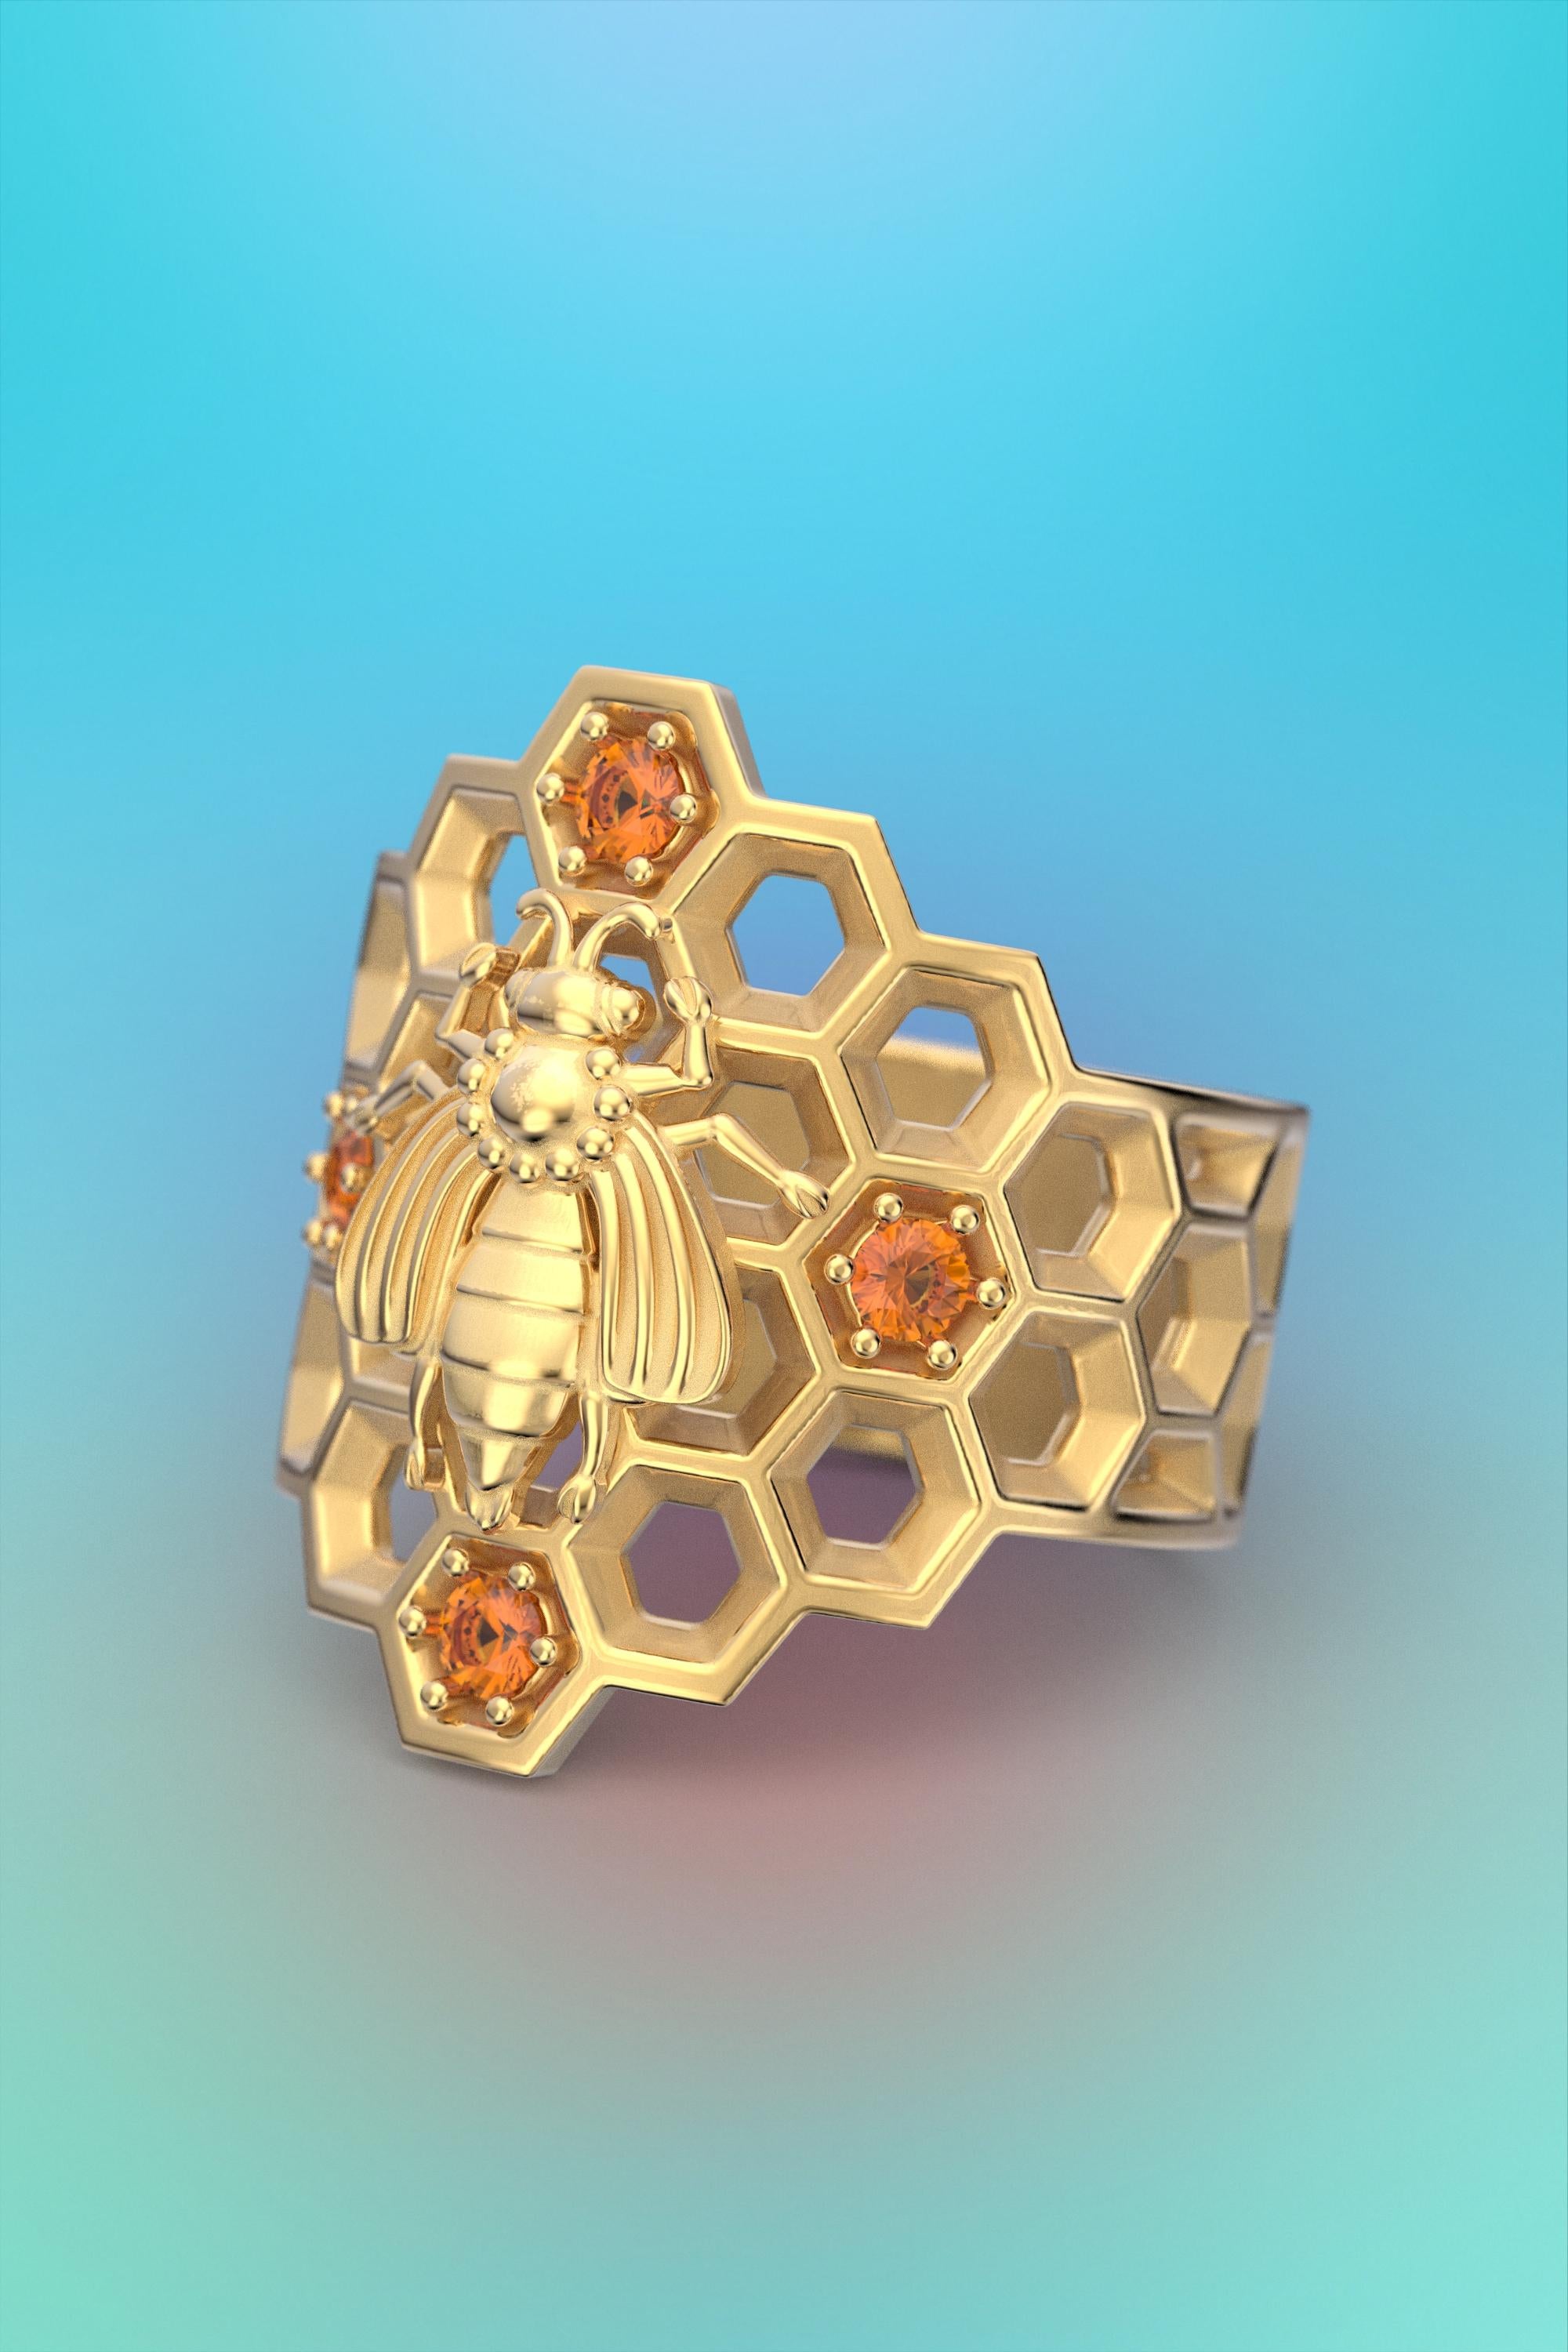 For Sale:   Honeycomb Bee Ring in 18k Solid Gold with natural Orange Spessartite Garnet 9